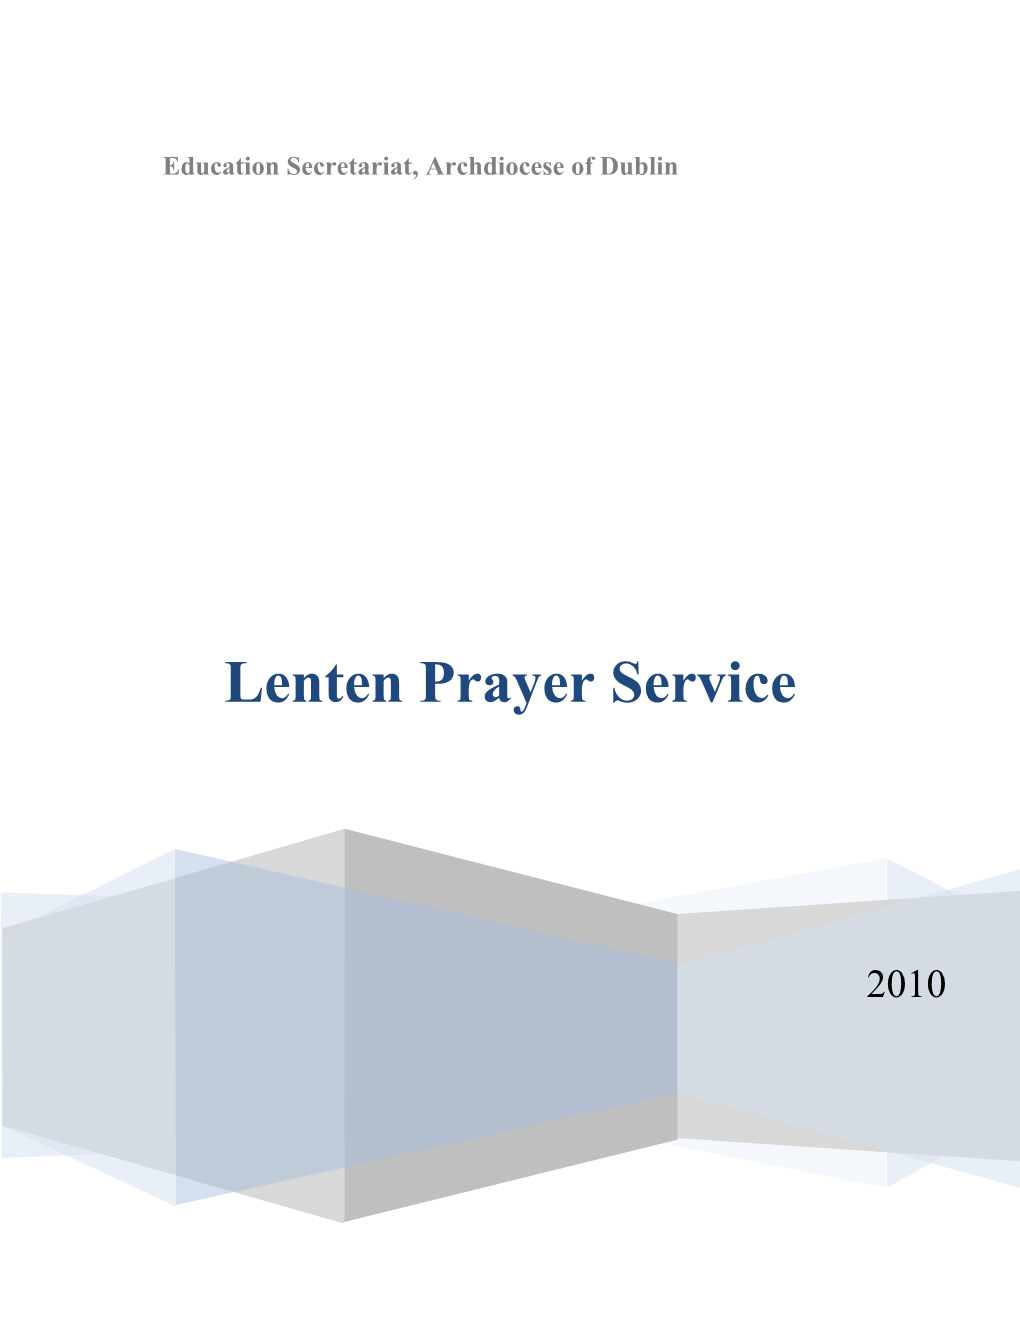 Liturgy for Lenten Prayer Service